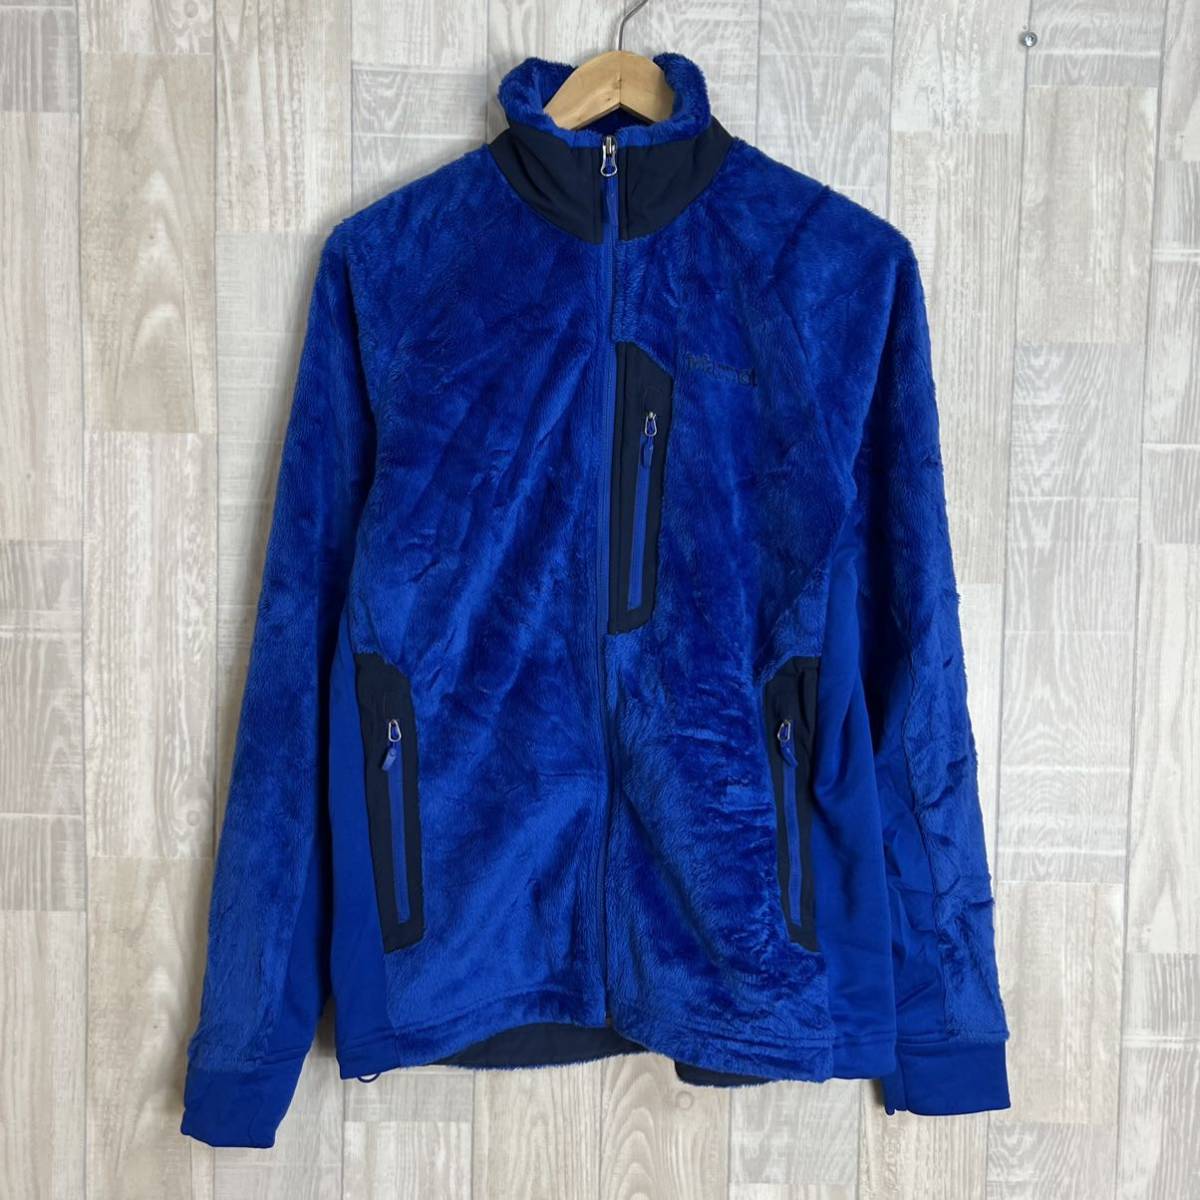 M3527 Marmot Marmot fleece jacket S/P size blue blue series men's POLARTEC outer outer garment feather woven Zip up 